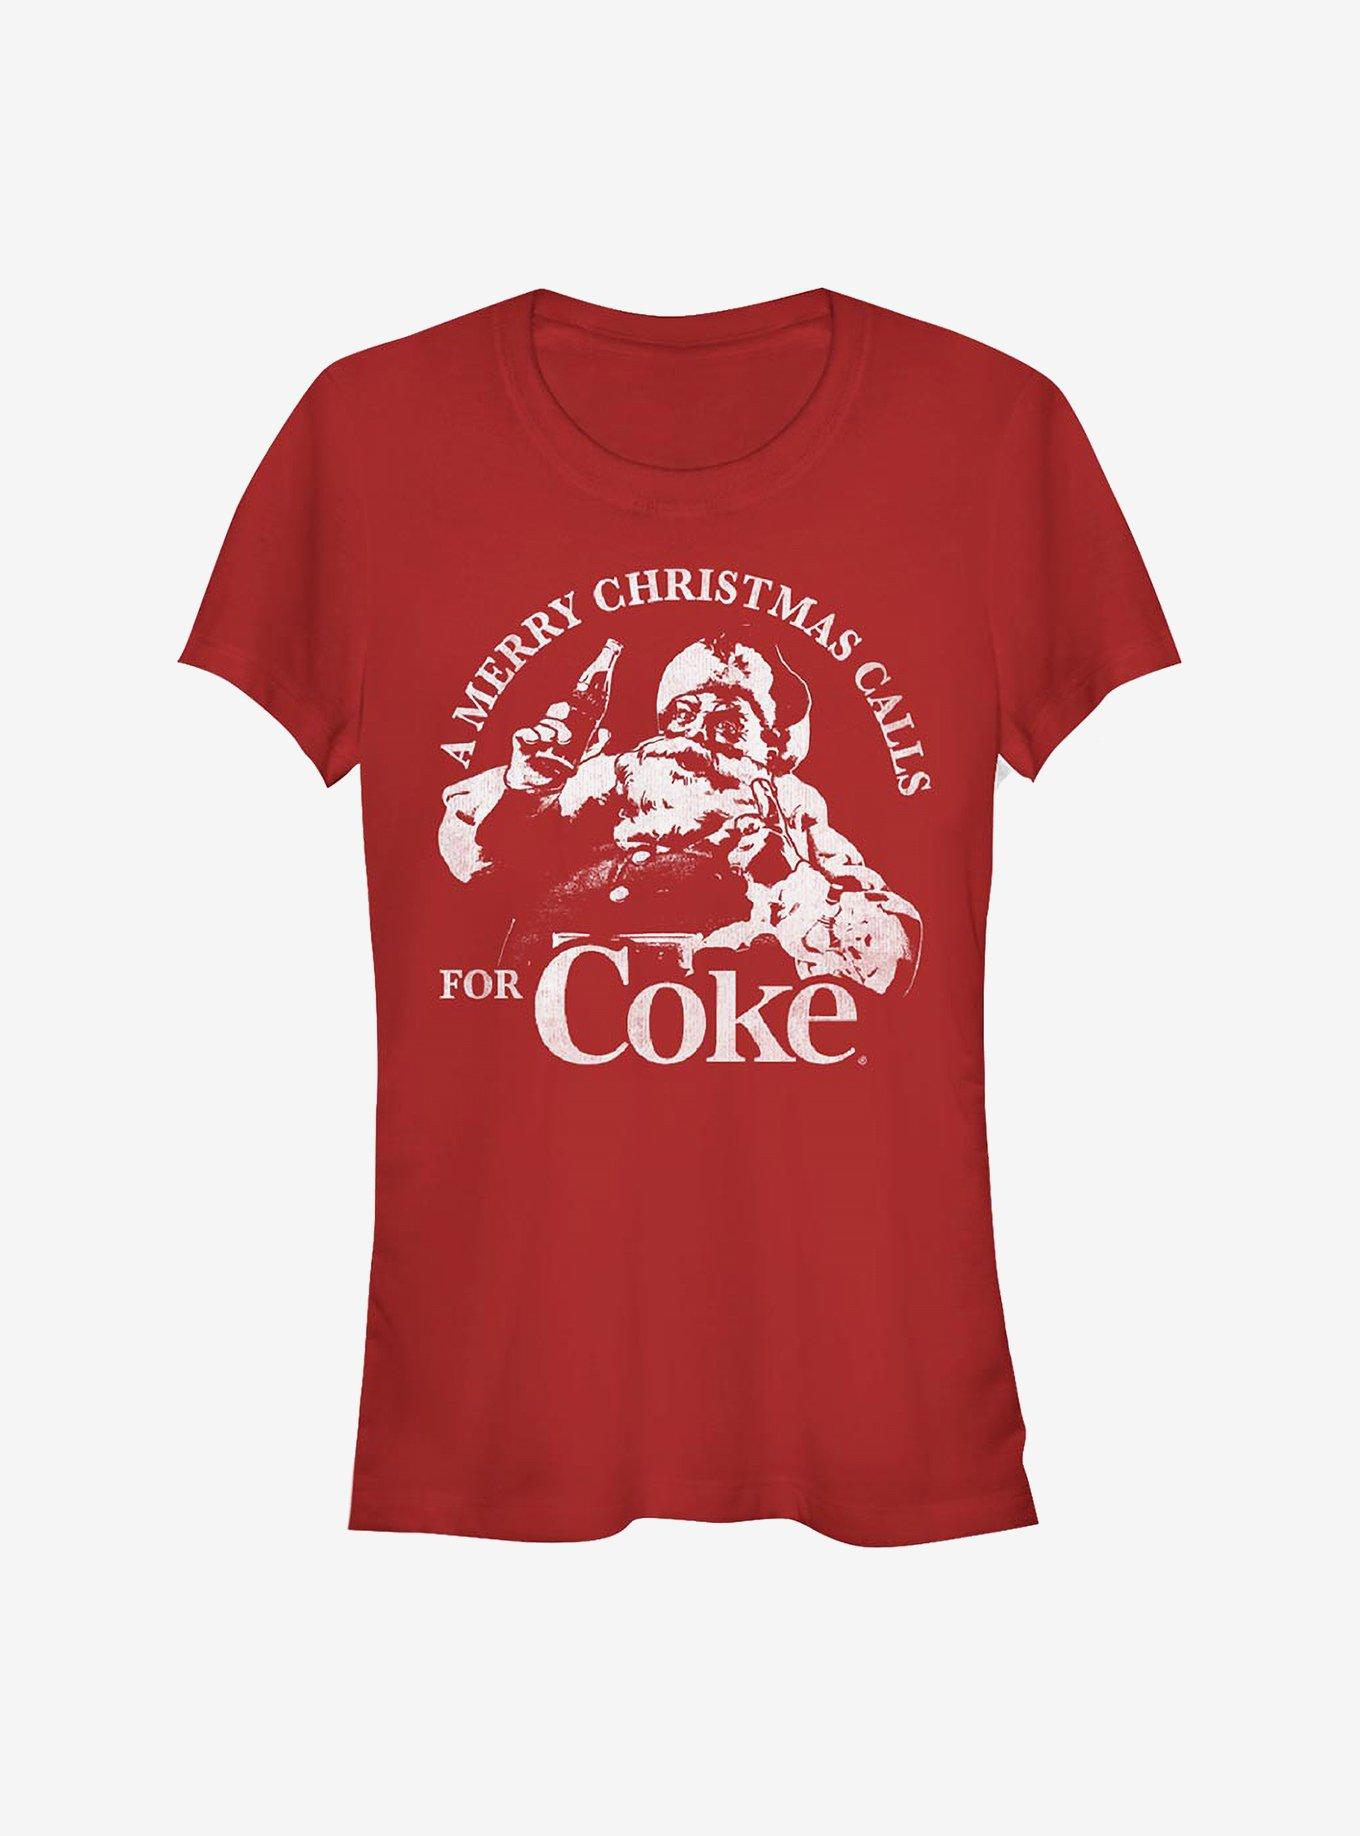 Coke A Merry Christmas Calls Comp Girls T-Shirt, , hi-res